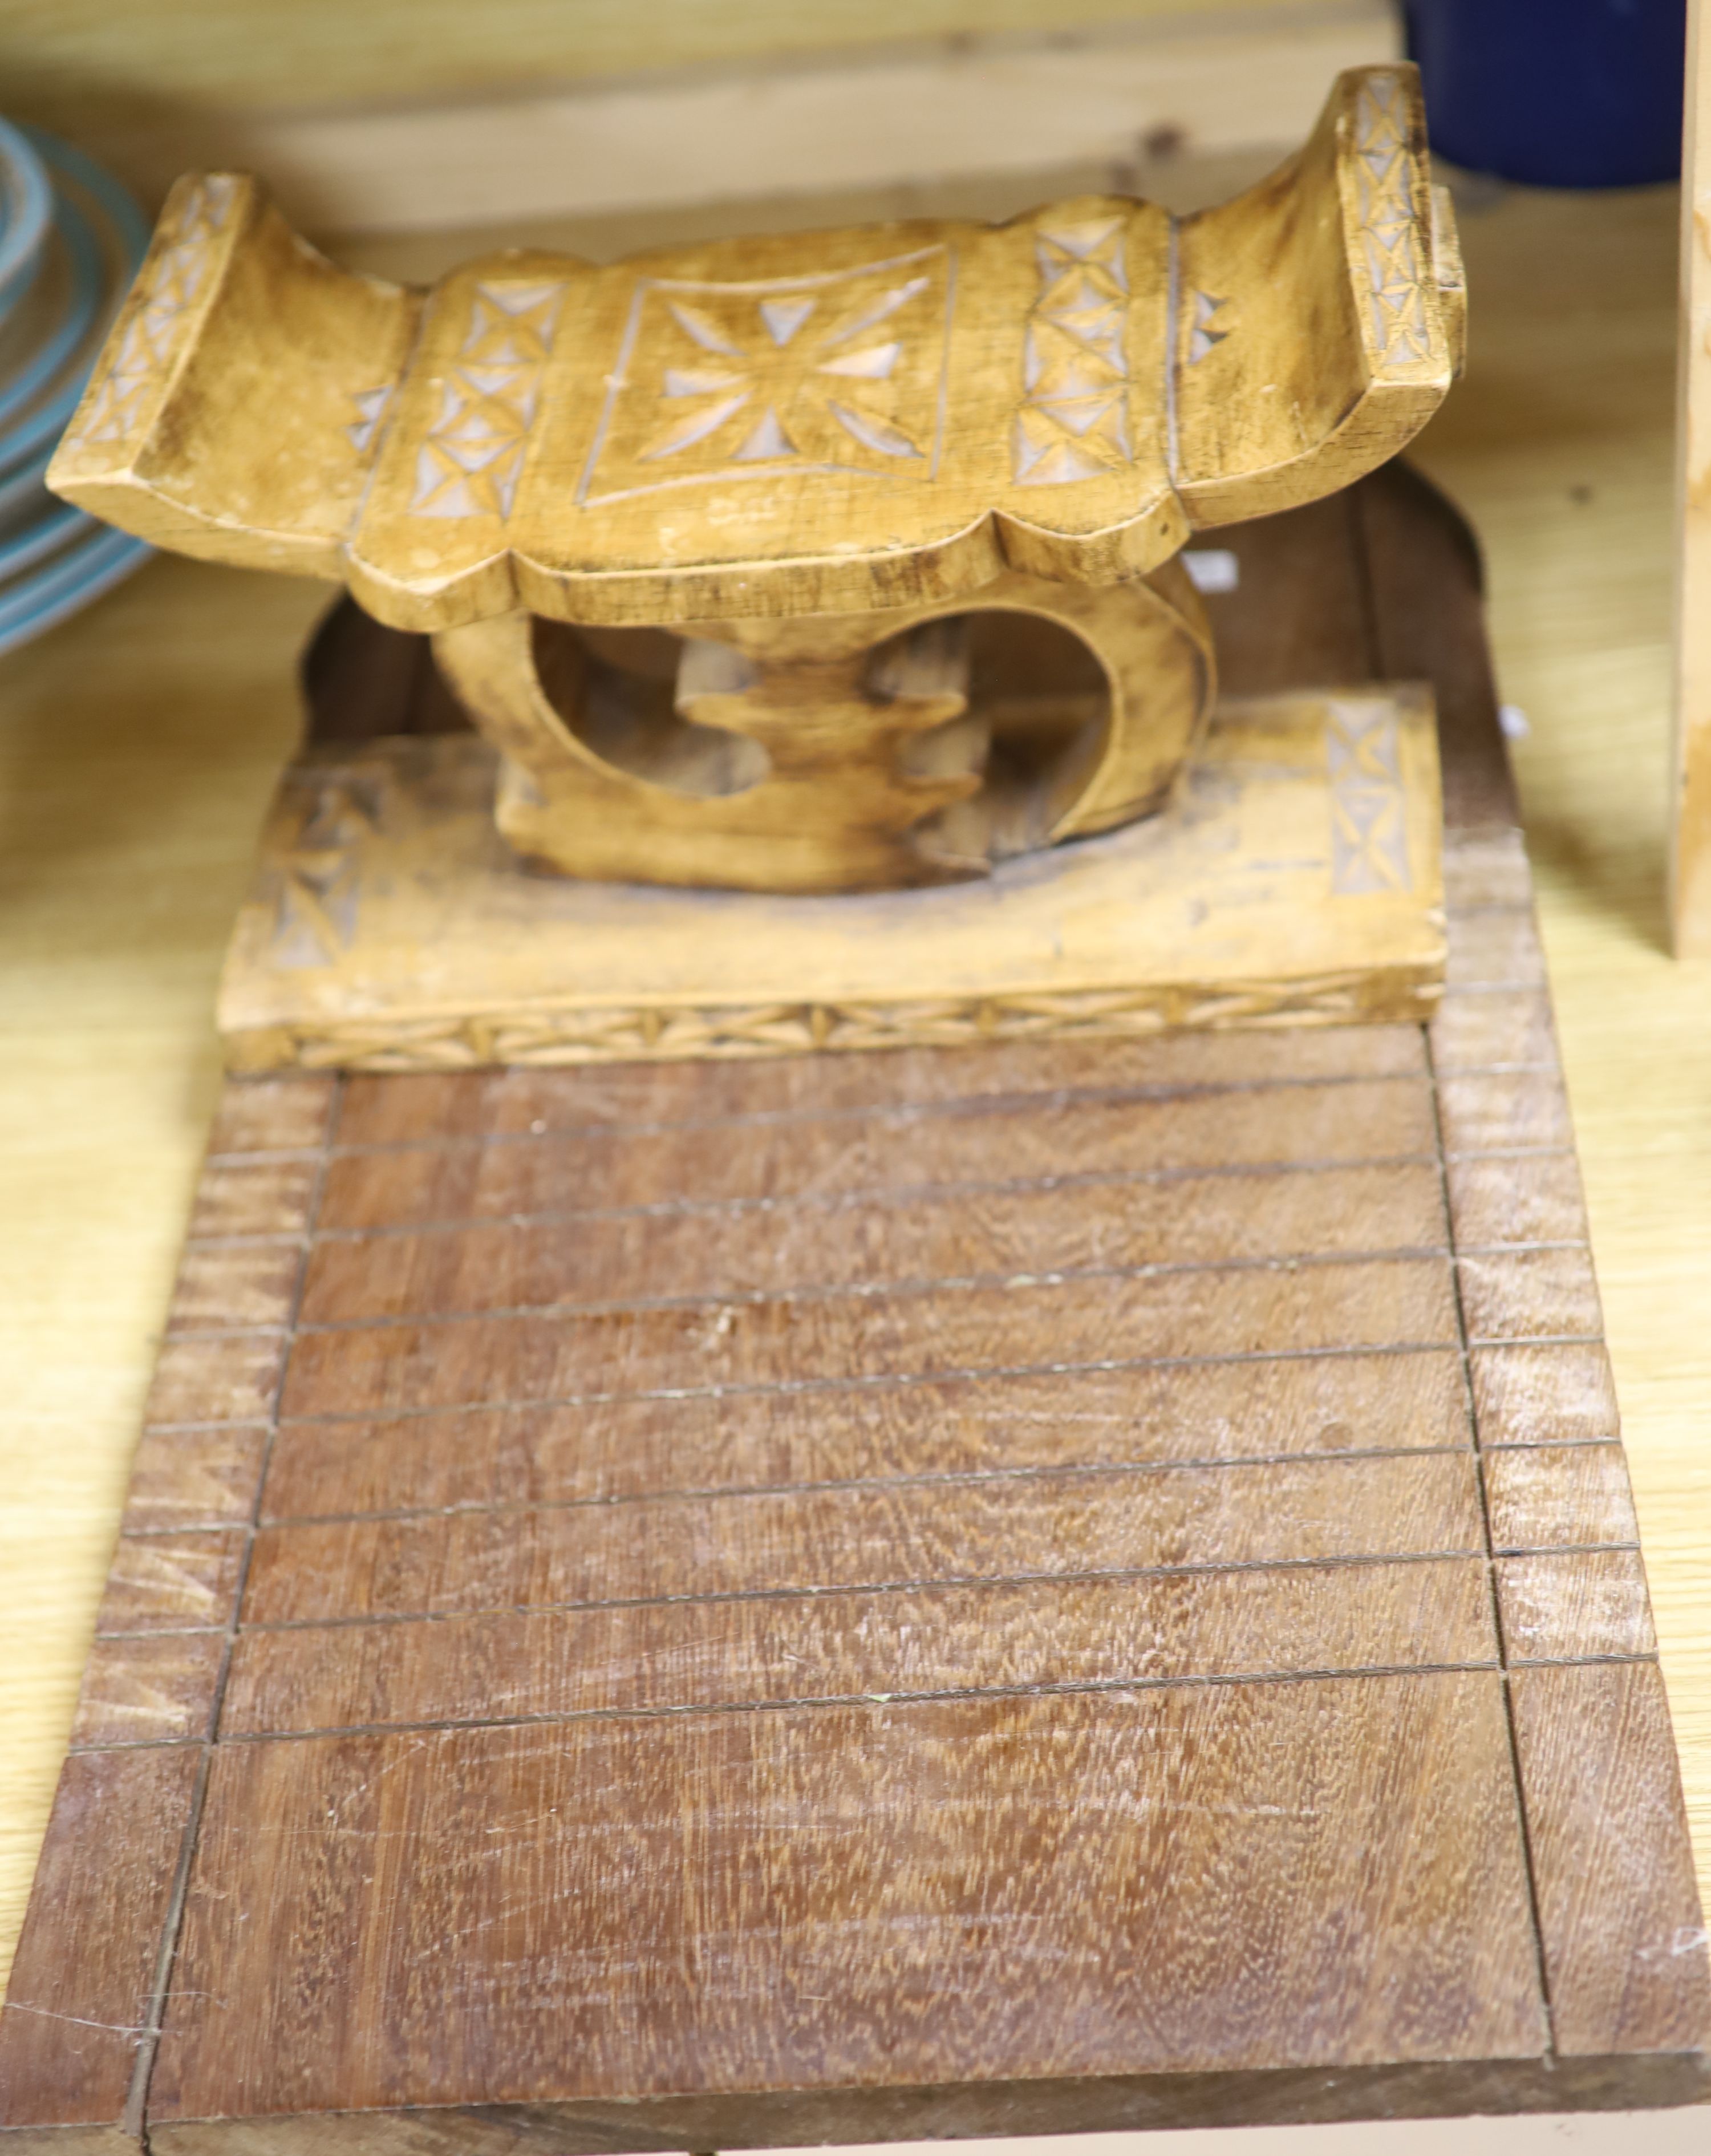 An Ashanti style stool and a shove hapenny board